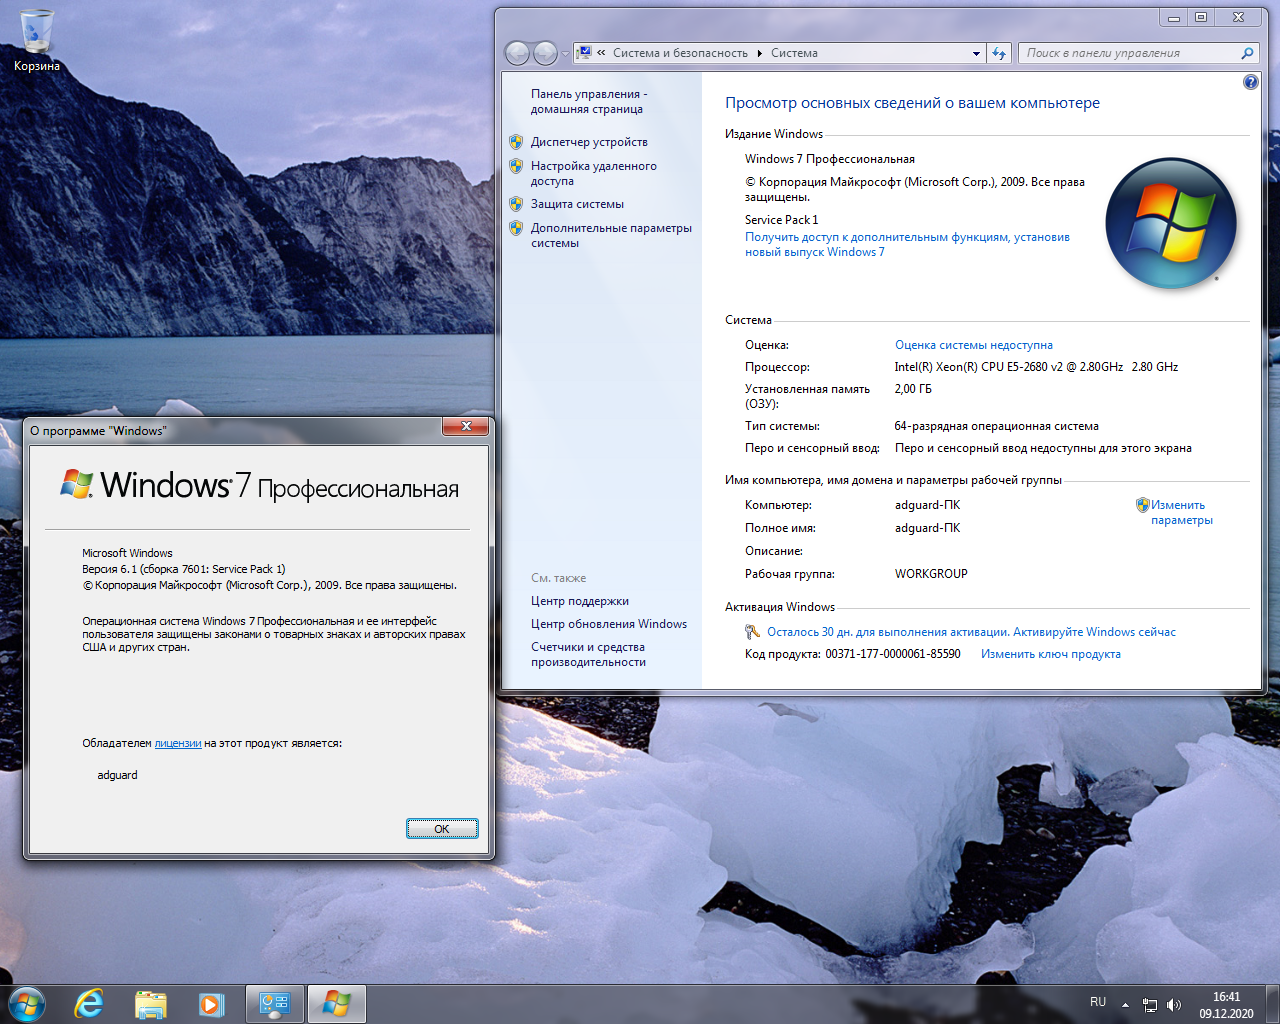 Активатор 7 сборка 7601. Windows 7 сборка 7601. Windows 7 sp1 with update [7601.26321]. Активатор 7601 Windows программа. Сборка 7601 ваша копия Windows 7 активатор.